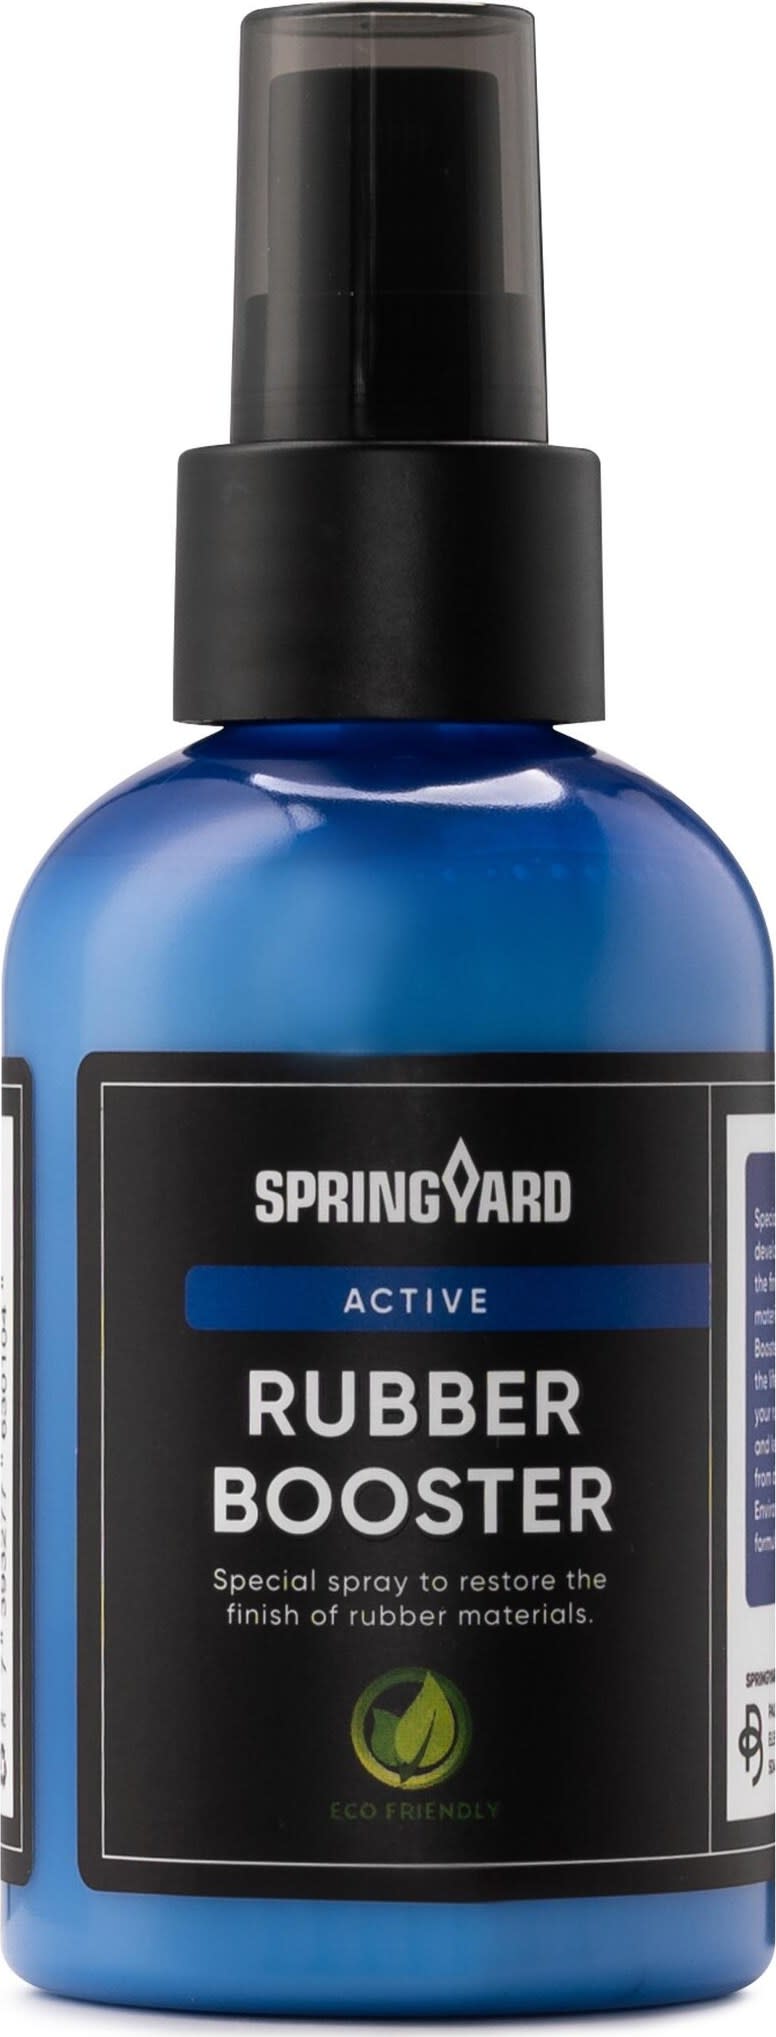 Springyard Rubber Booster Neutral